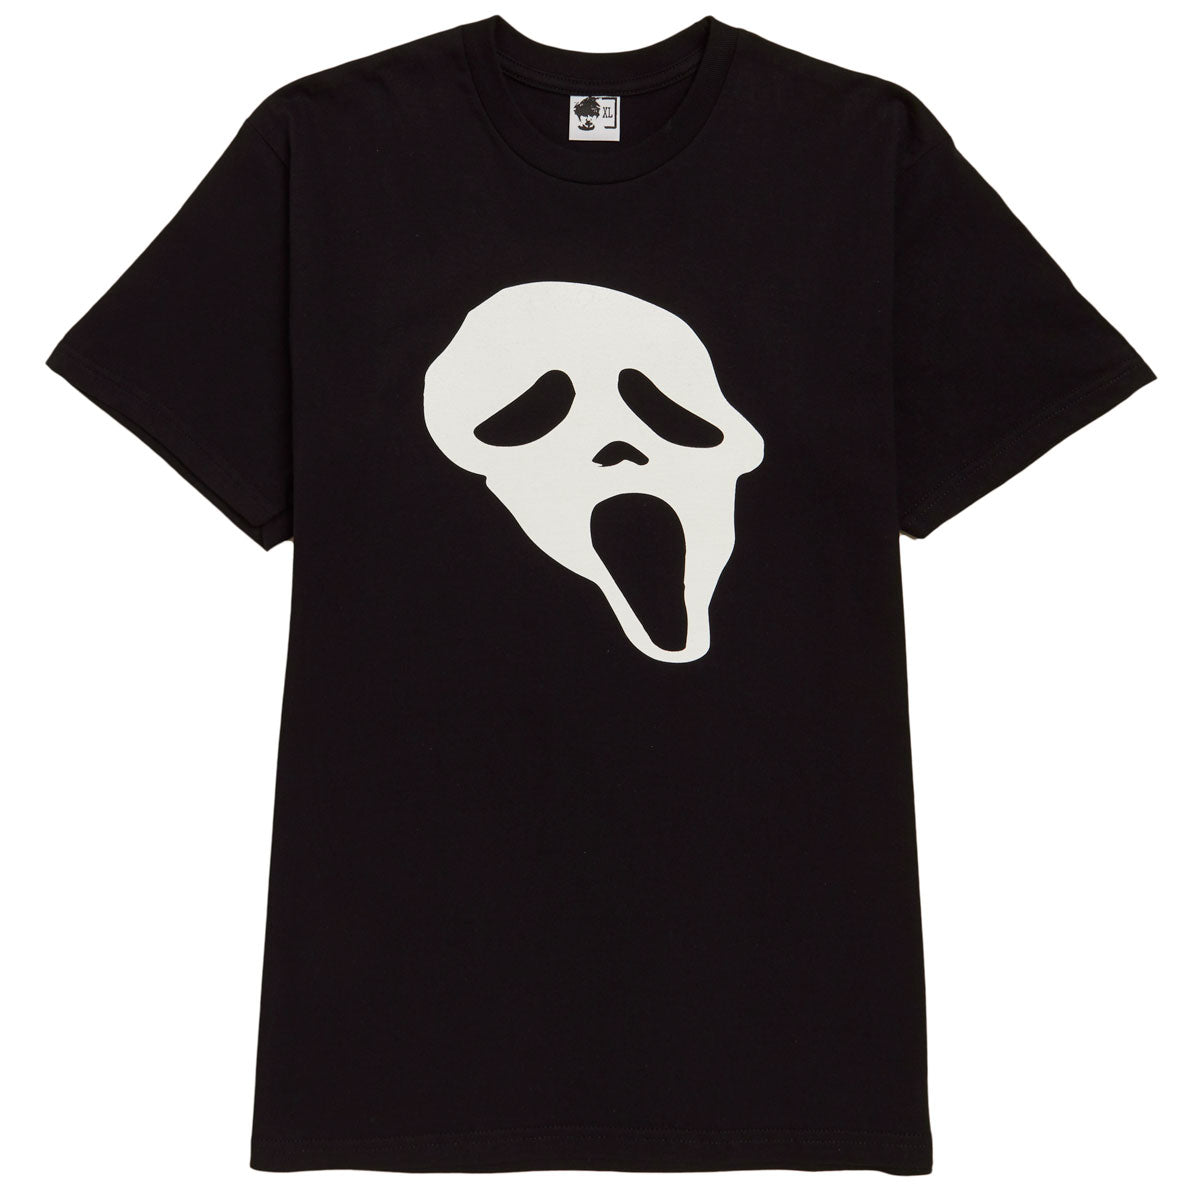 Stunt Large Ghostface T-Shirt - Black image 1